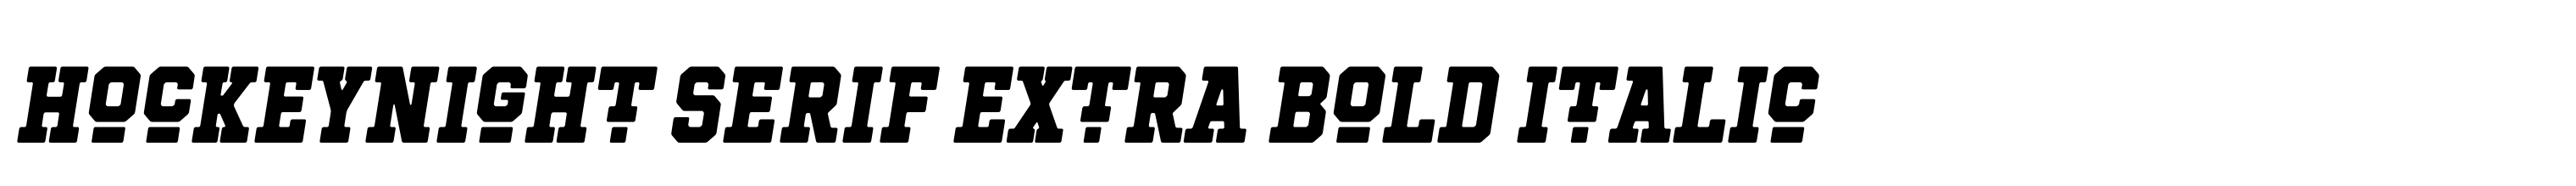 Hockeynight Serif Extra Bold Italic